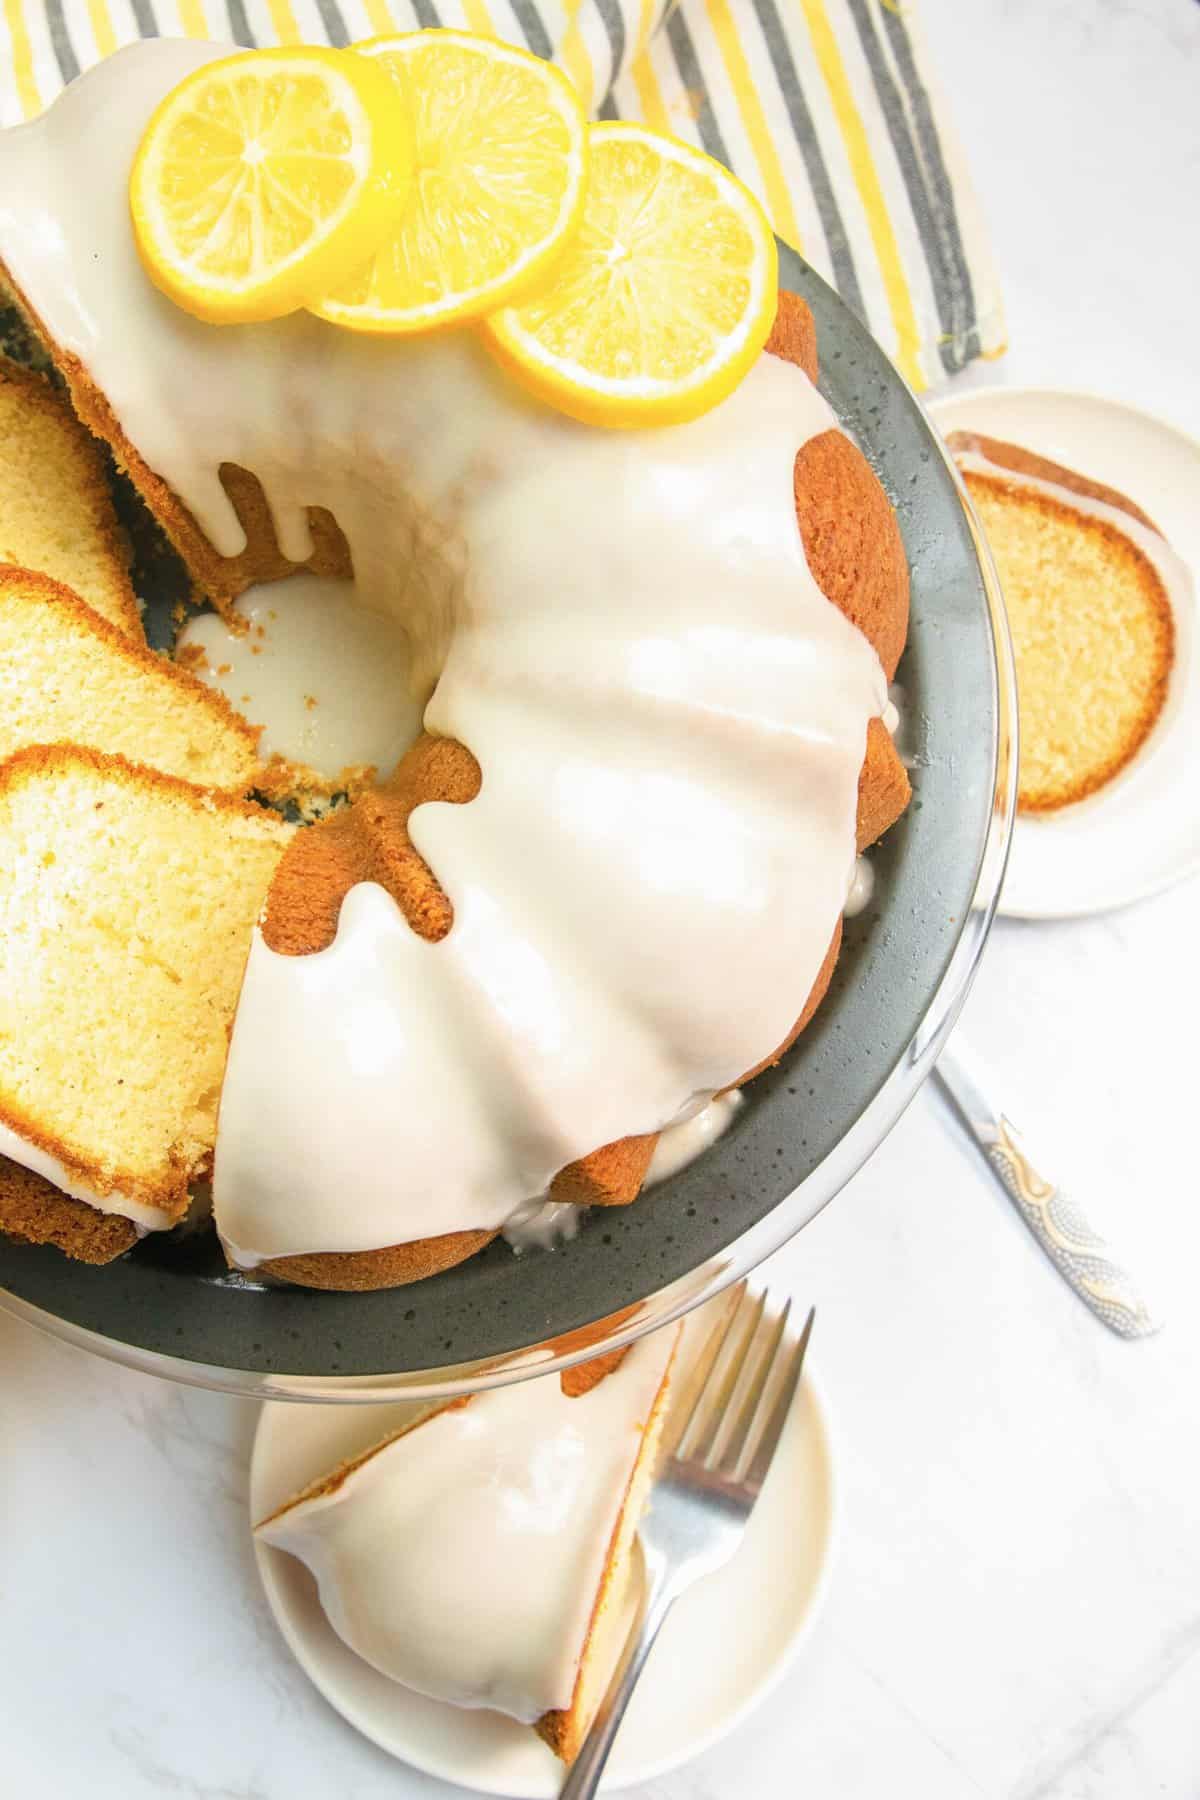 Slicing lemon bundt cake. It's a citrus lover's dream